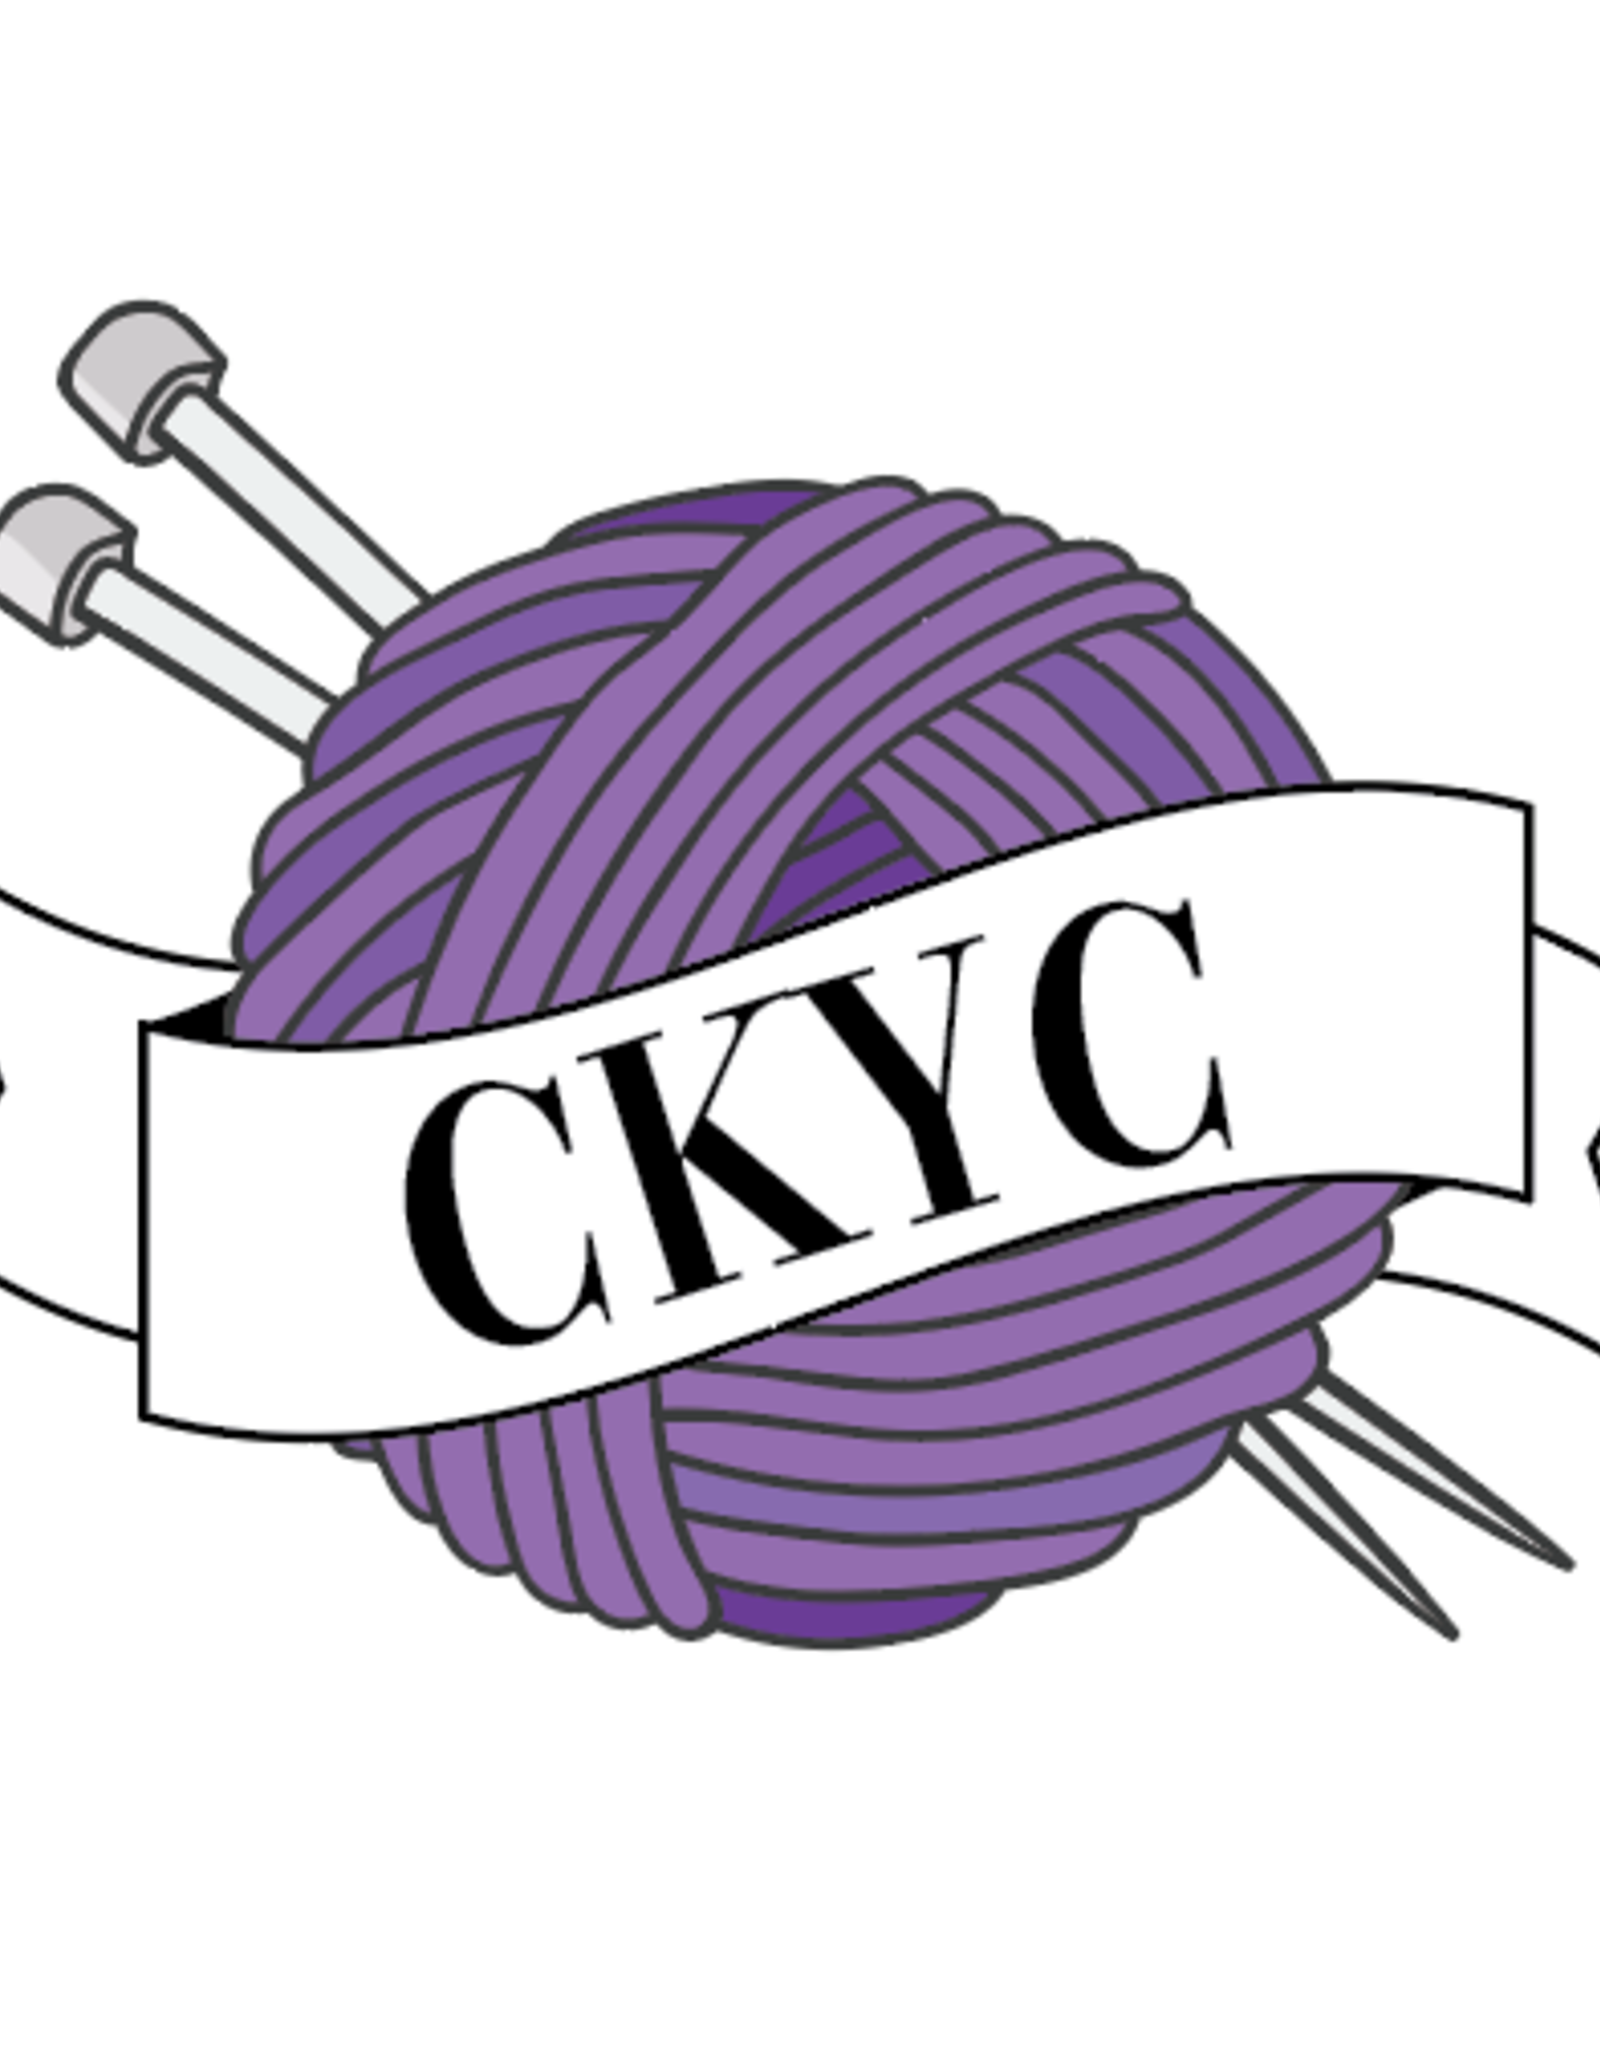 Close-Knit Yarn Cooperative Subscriber Enrollment